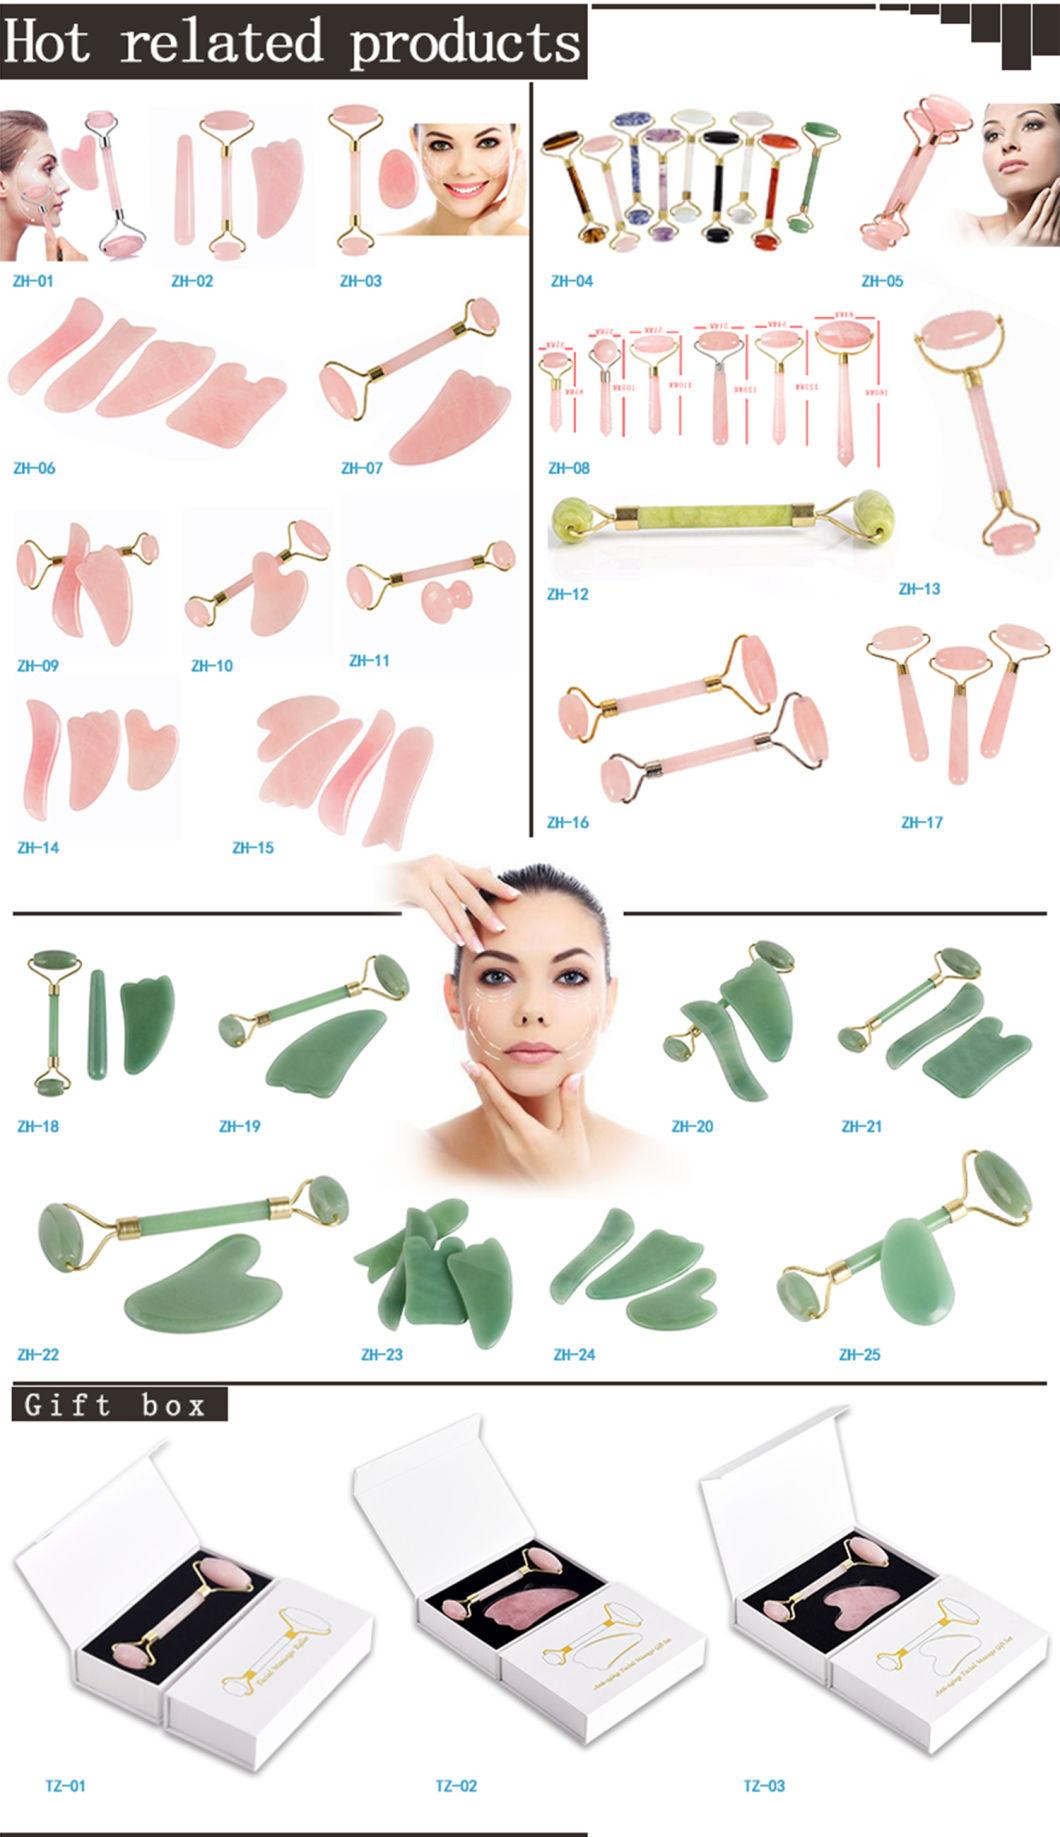 New Amazon Best Seller Facial Massage Rose Quartz Stone Gua Sha Tools Set and Jade Roller Massager for Face